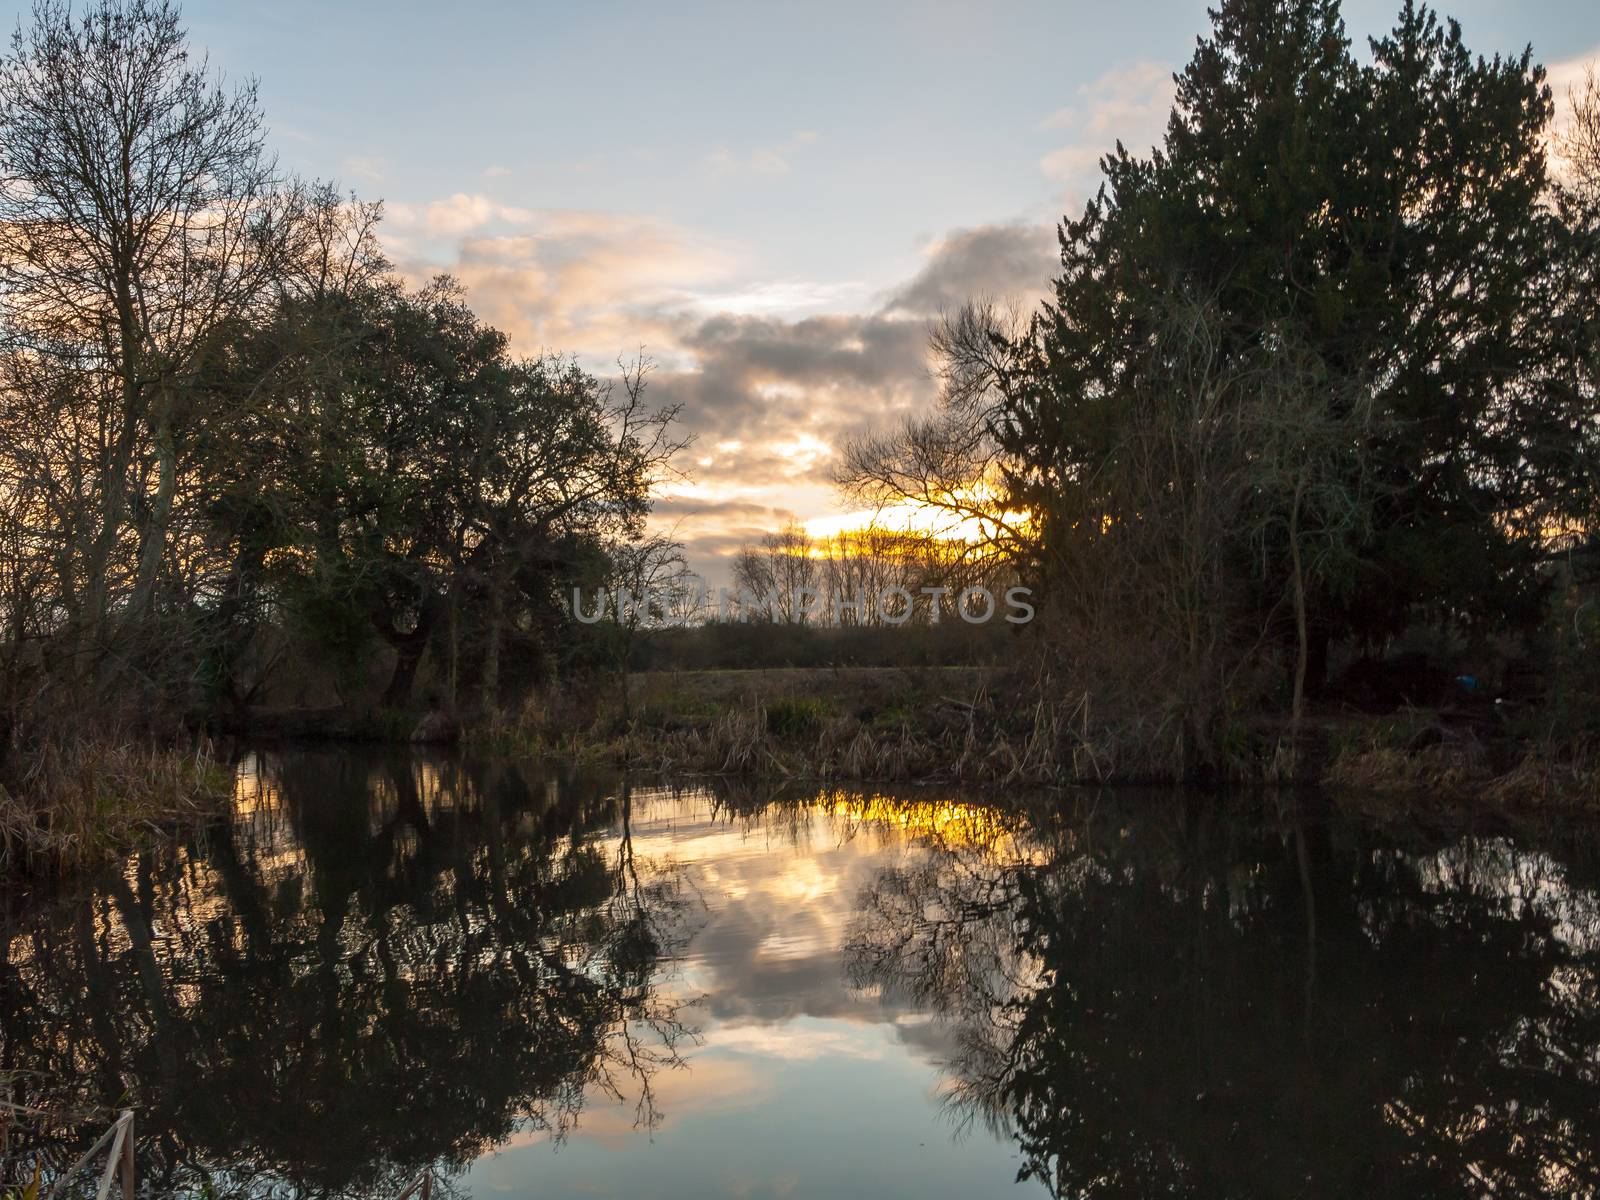 beautiful sun set autumn light sky over river trees reflections water surface; essex; england; uk